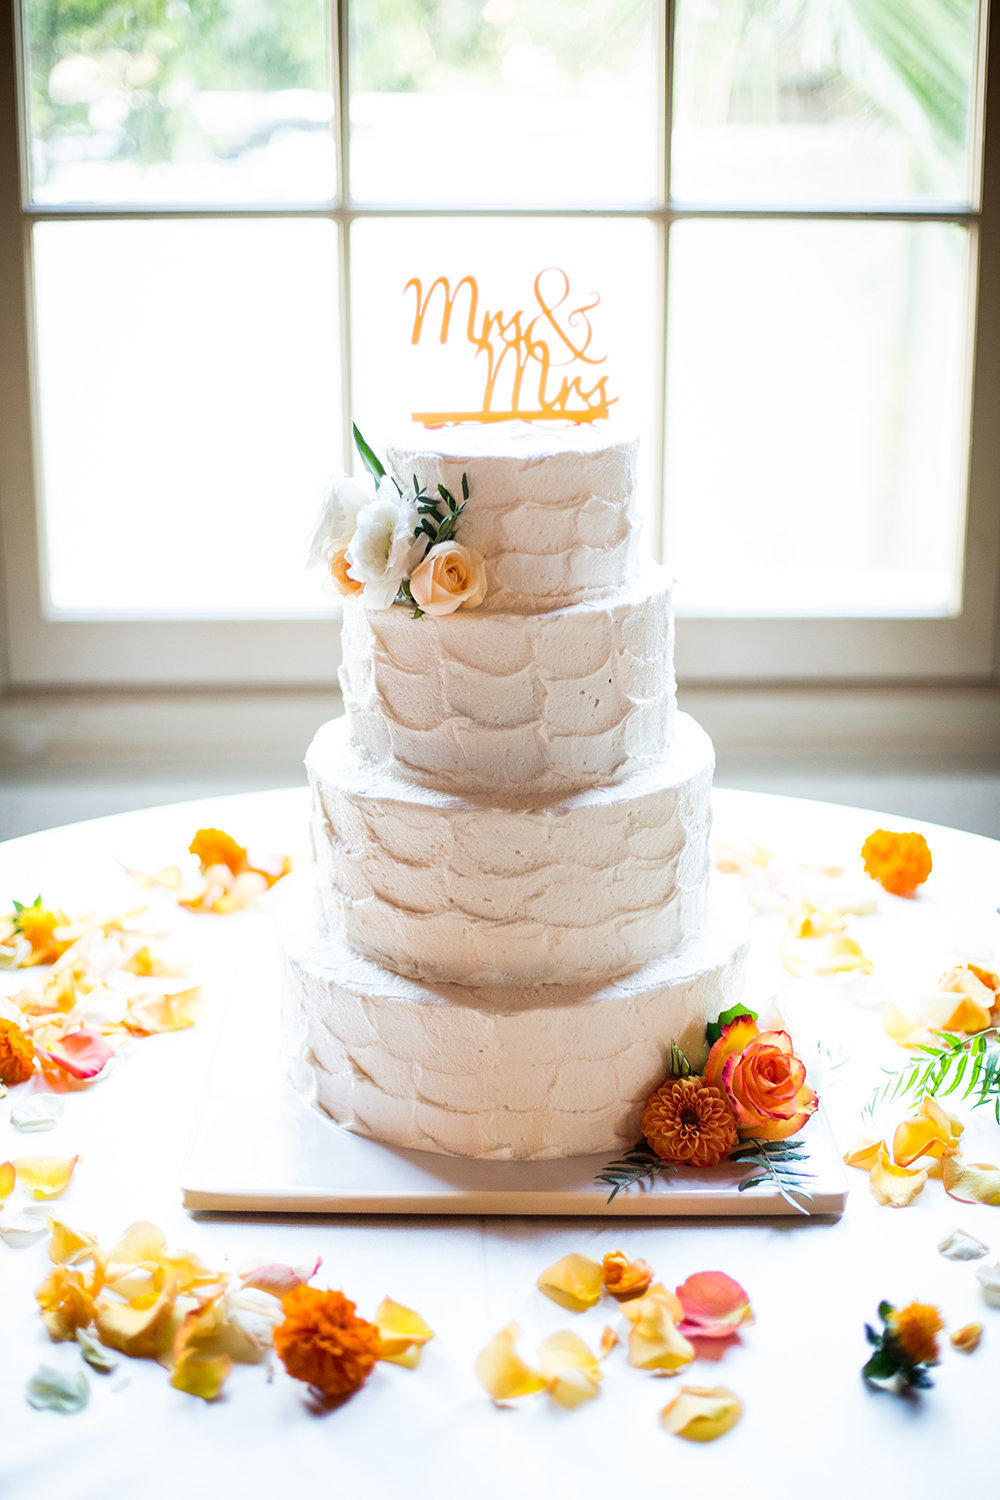 Bright flowers adorn this wedding cake